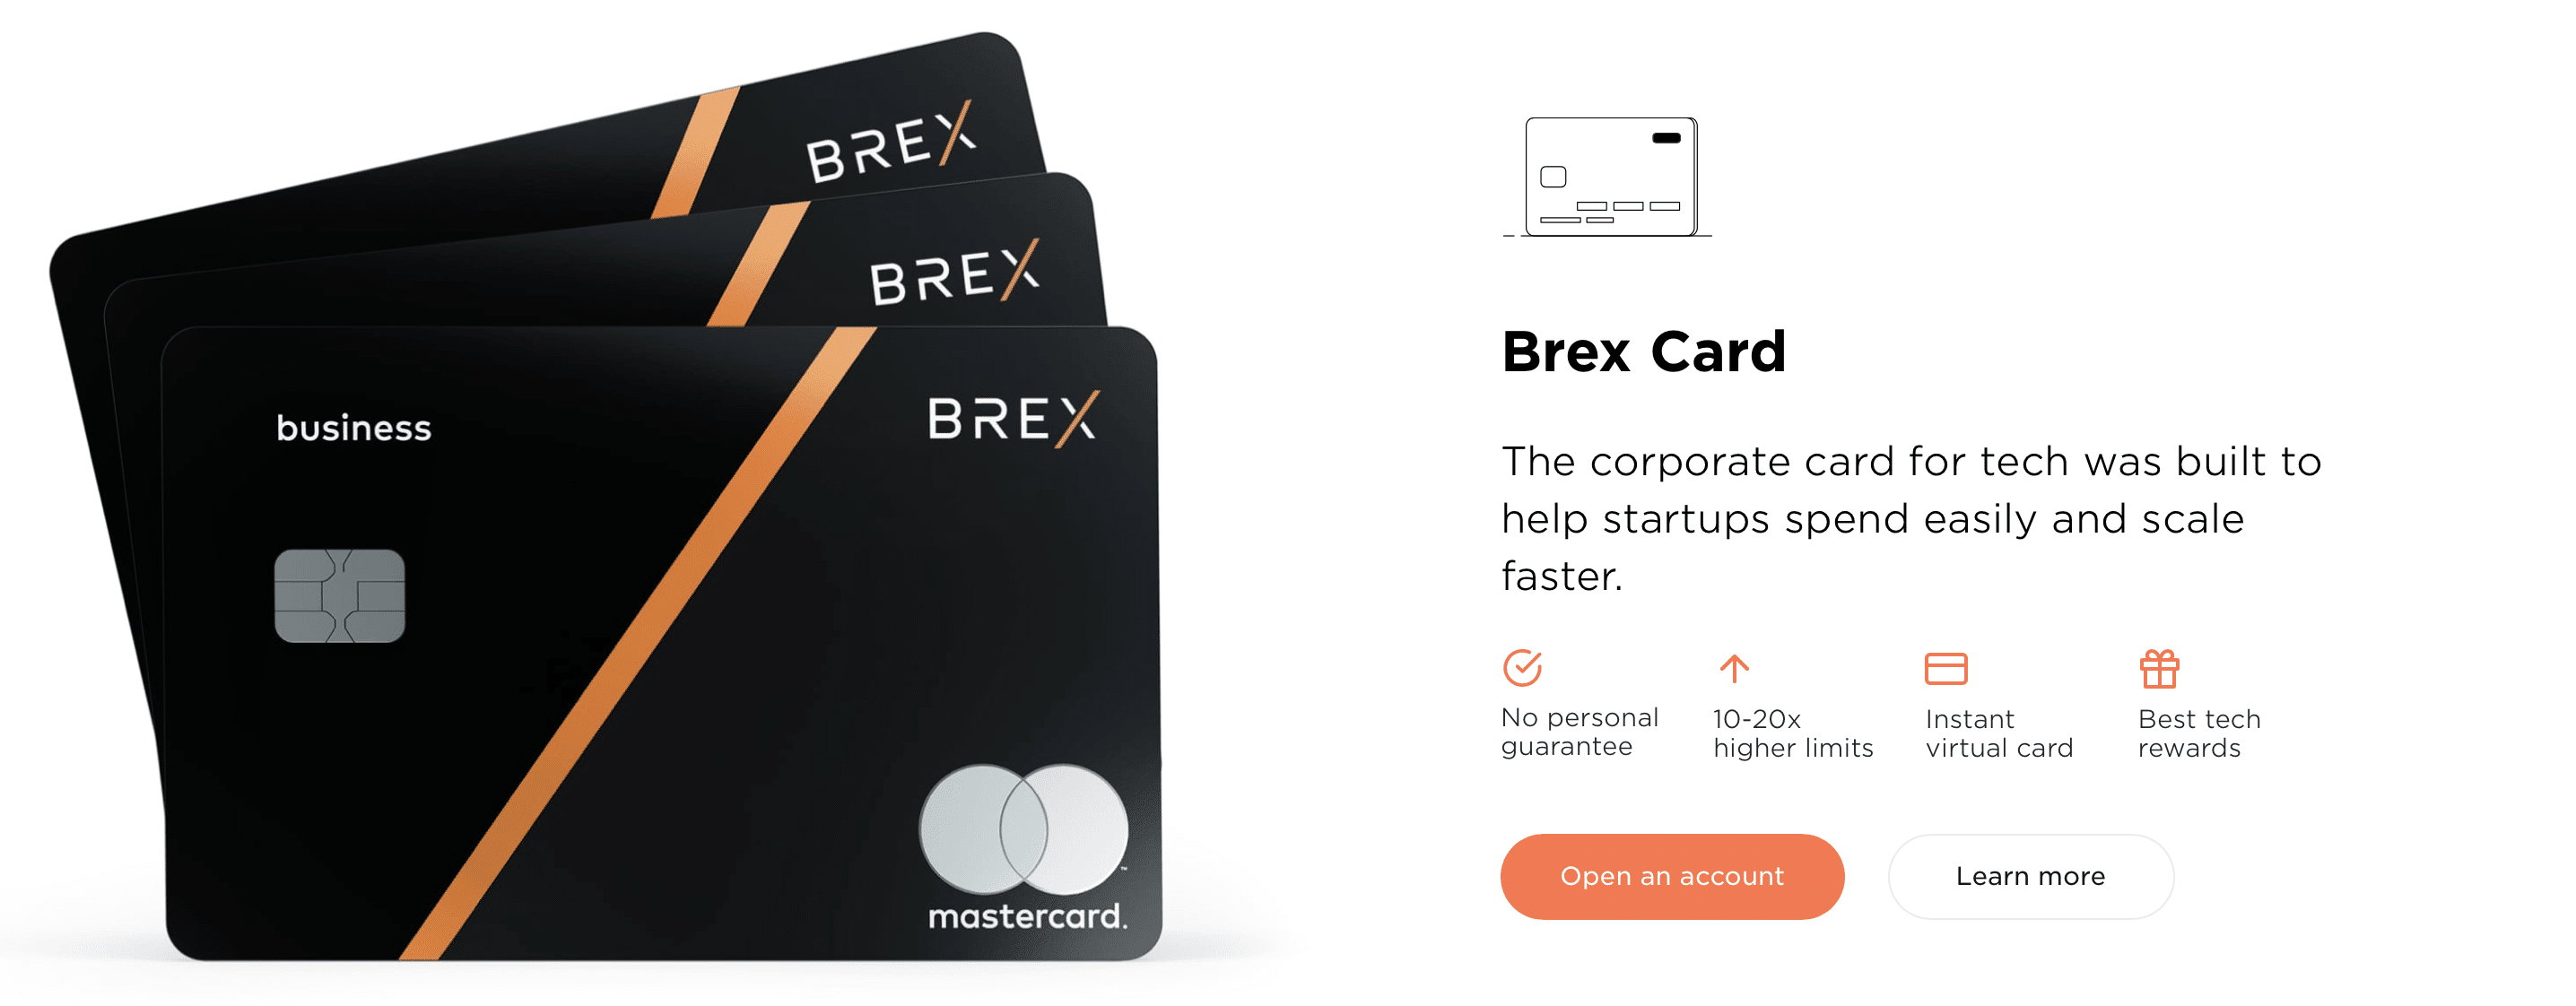 brex-card